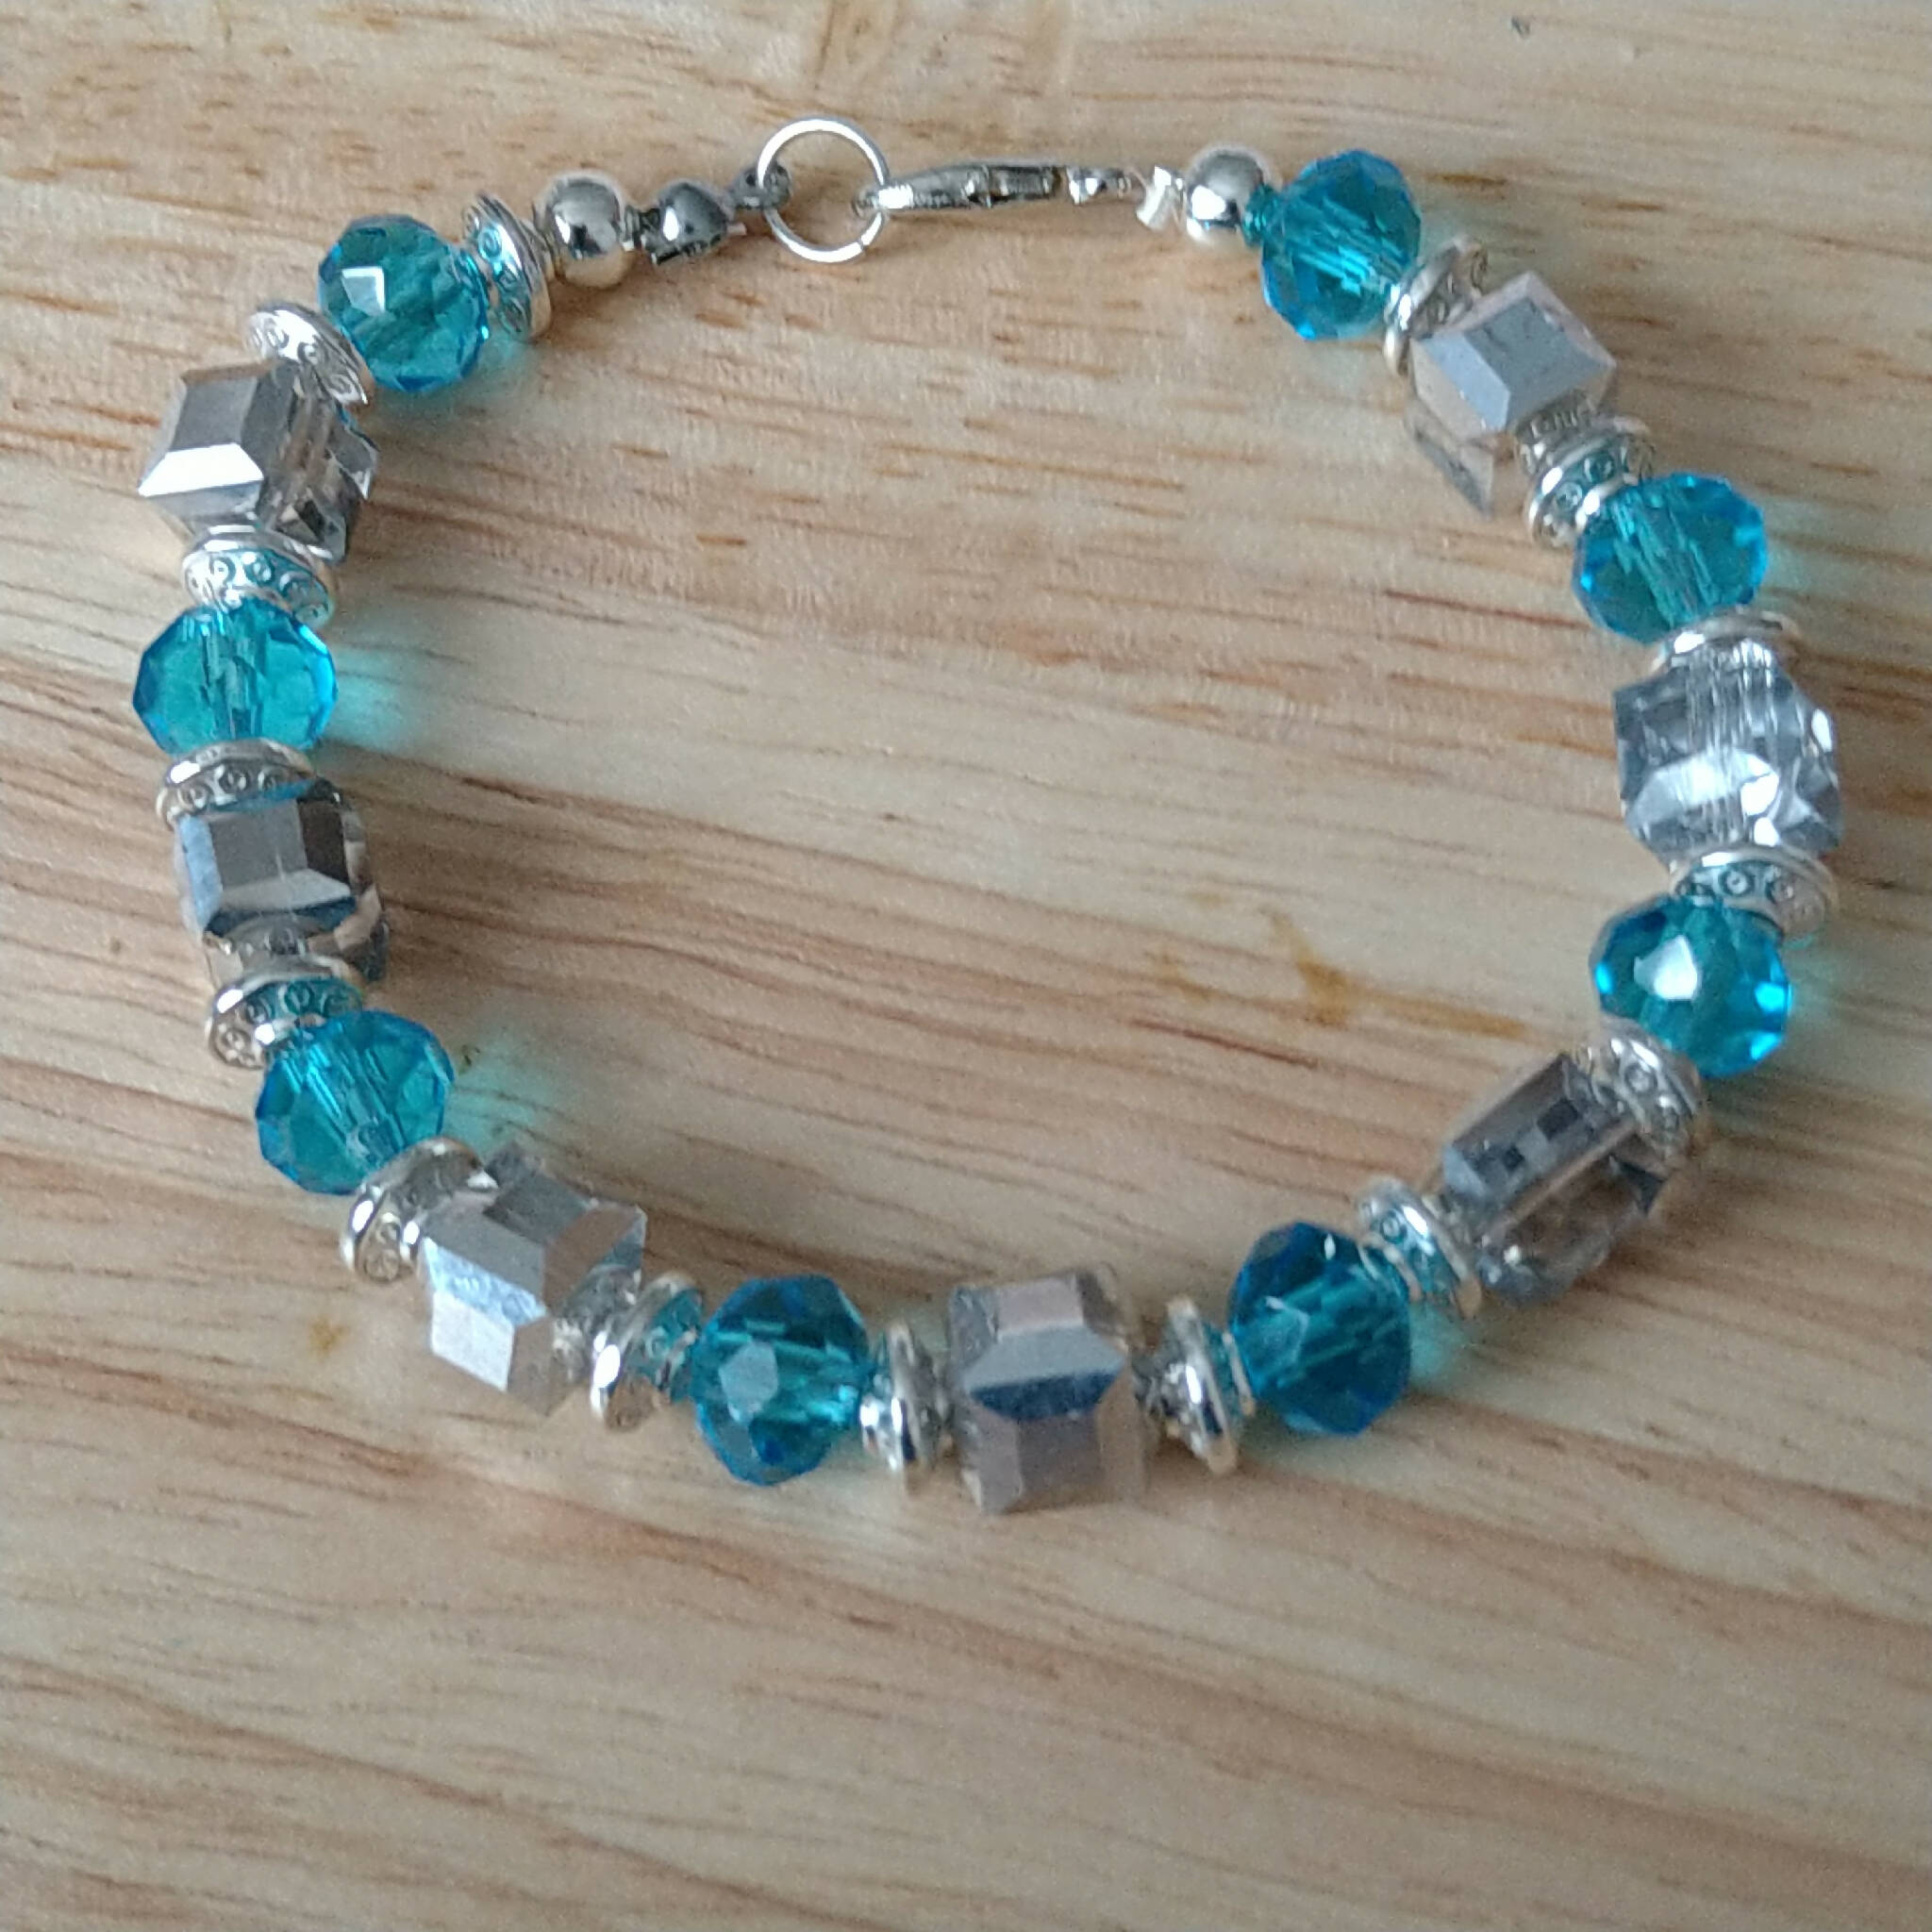 Blue & Silver coloured bracelet, handmade using recycled beads. 19cm length